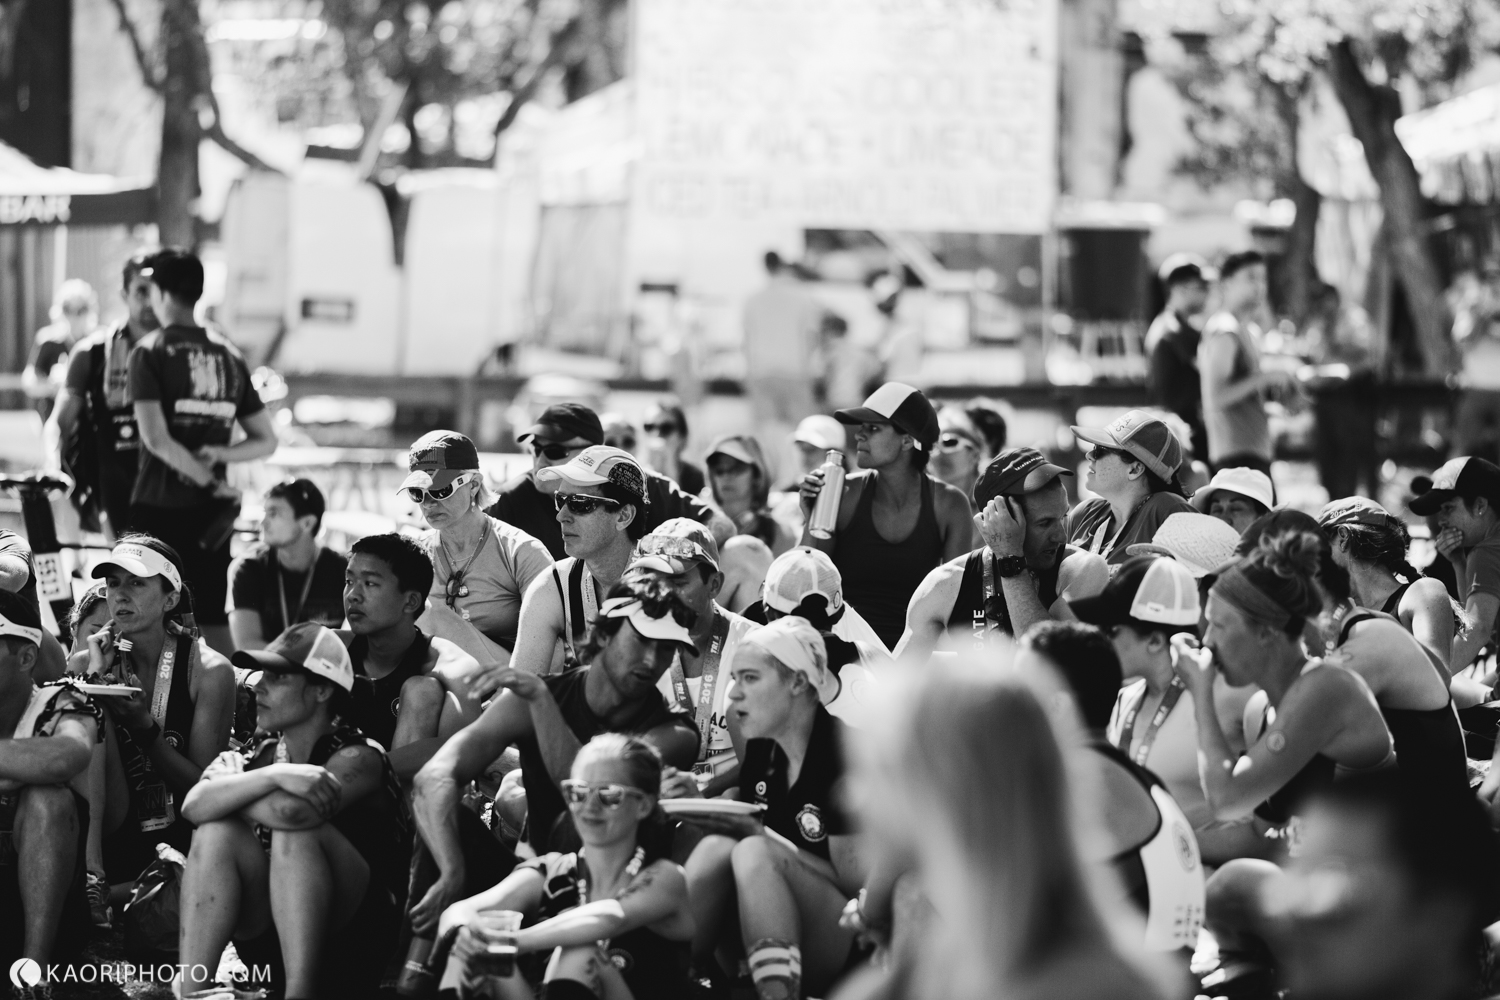 The “Woodstock” of Triathlons